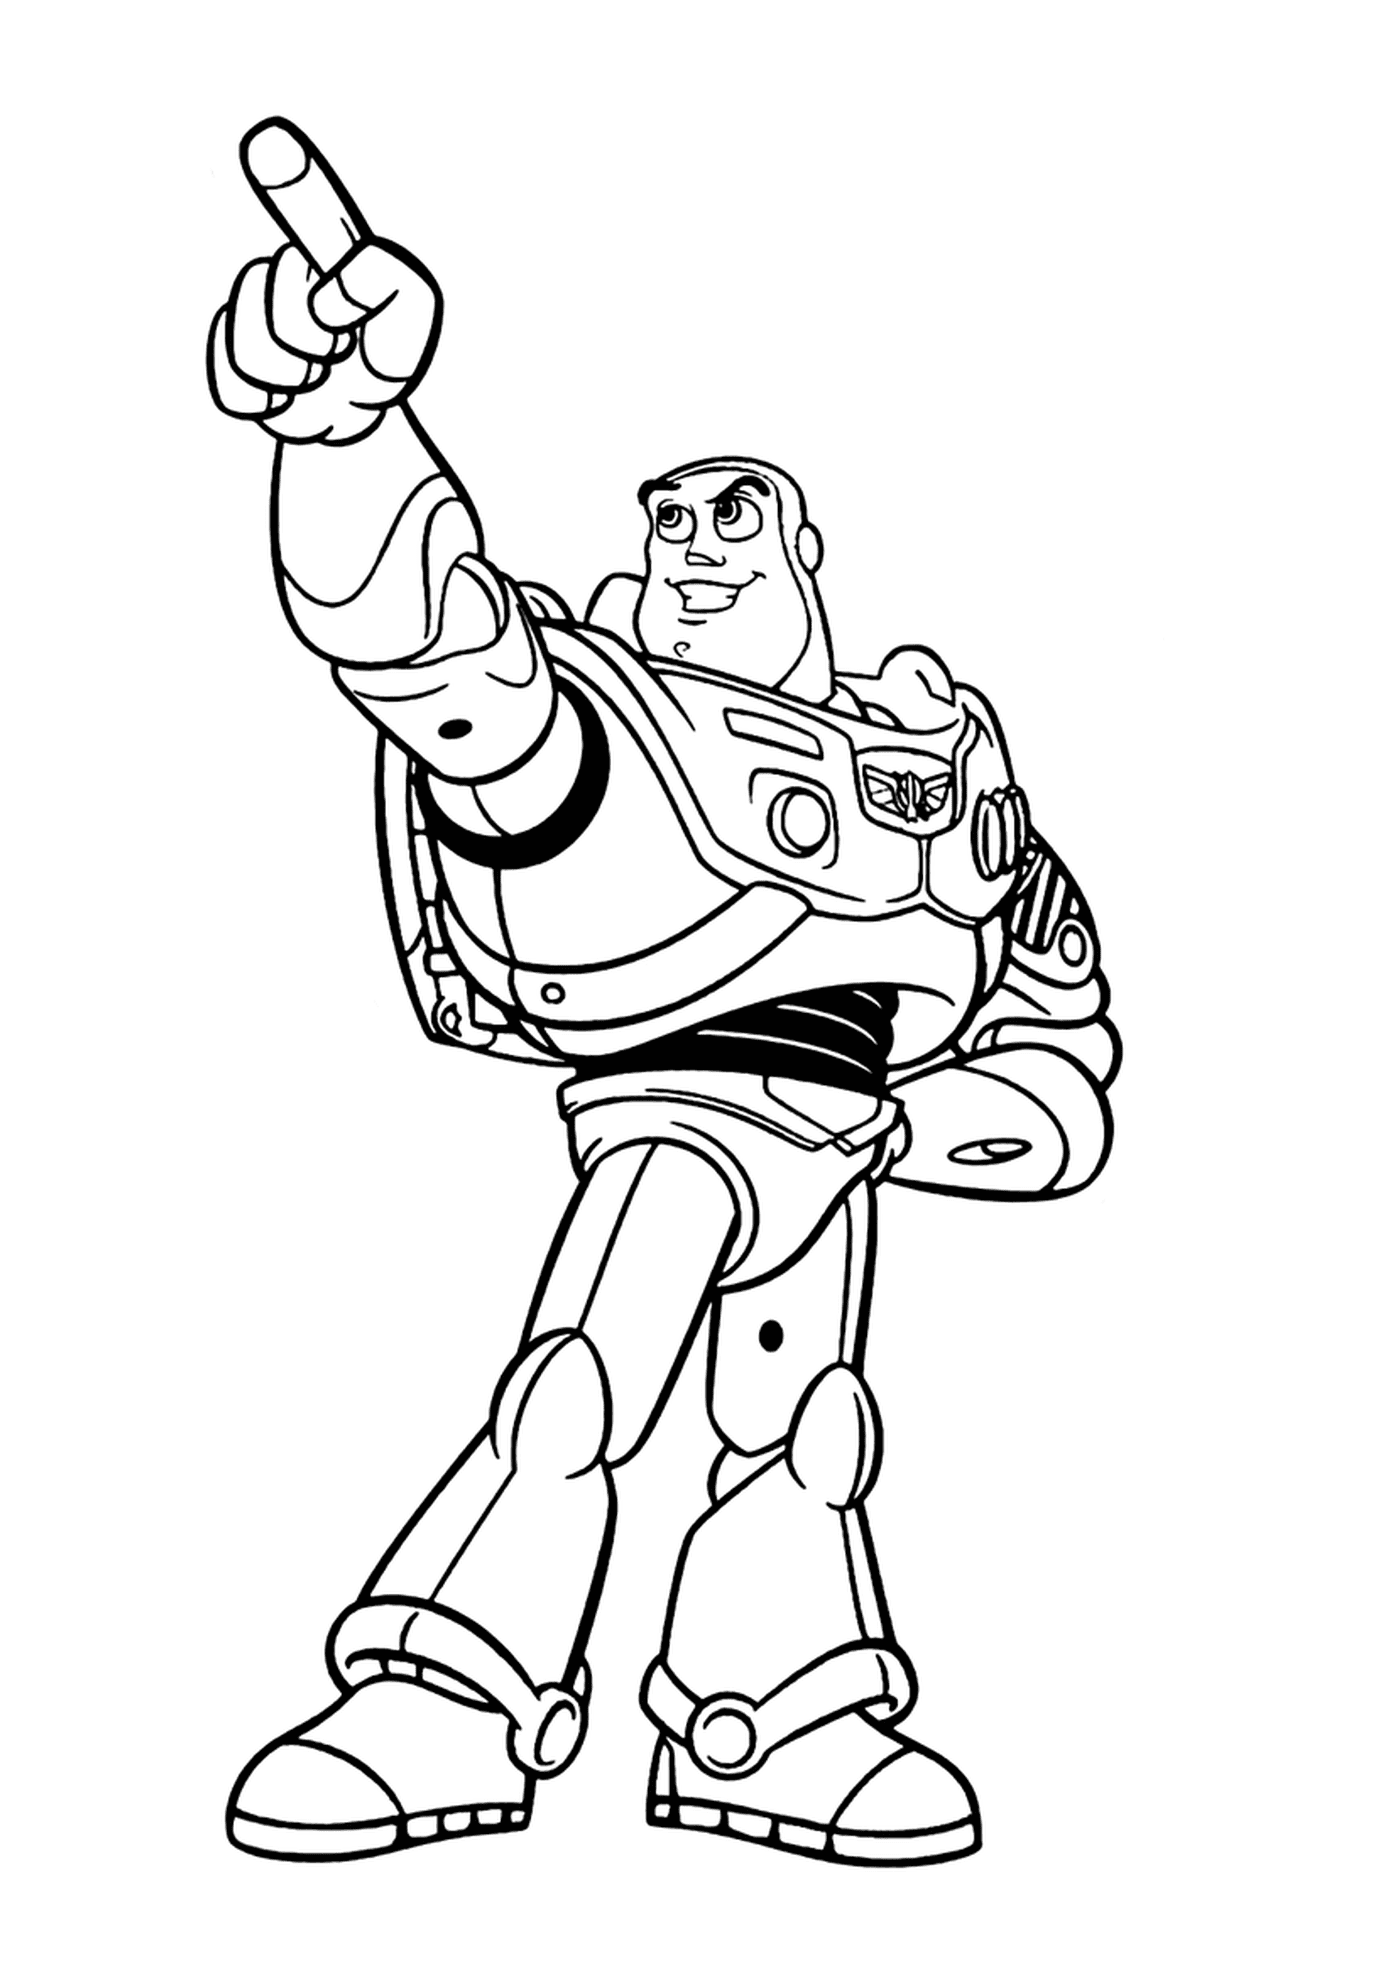   Buzz Lightyear, champion étoile intrépide 